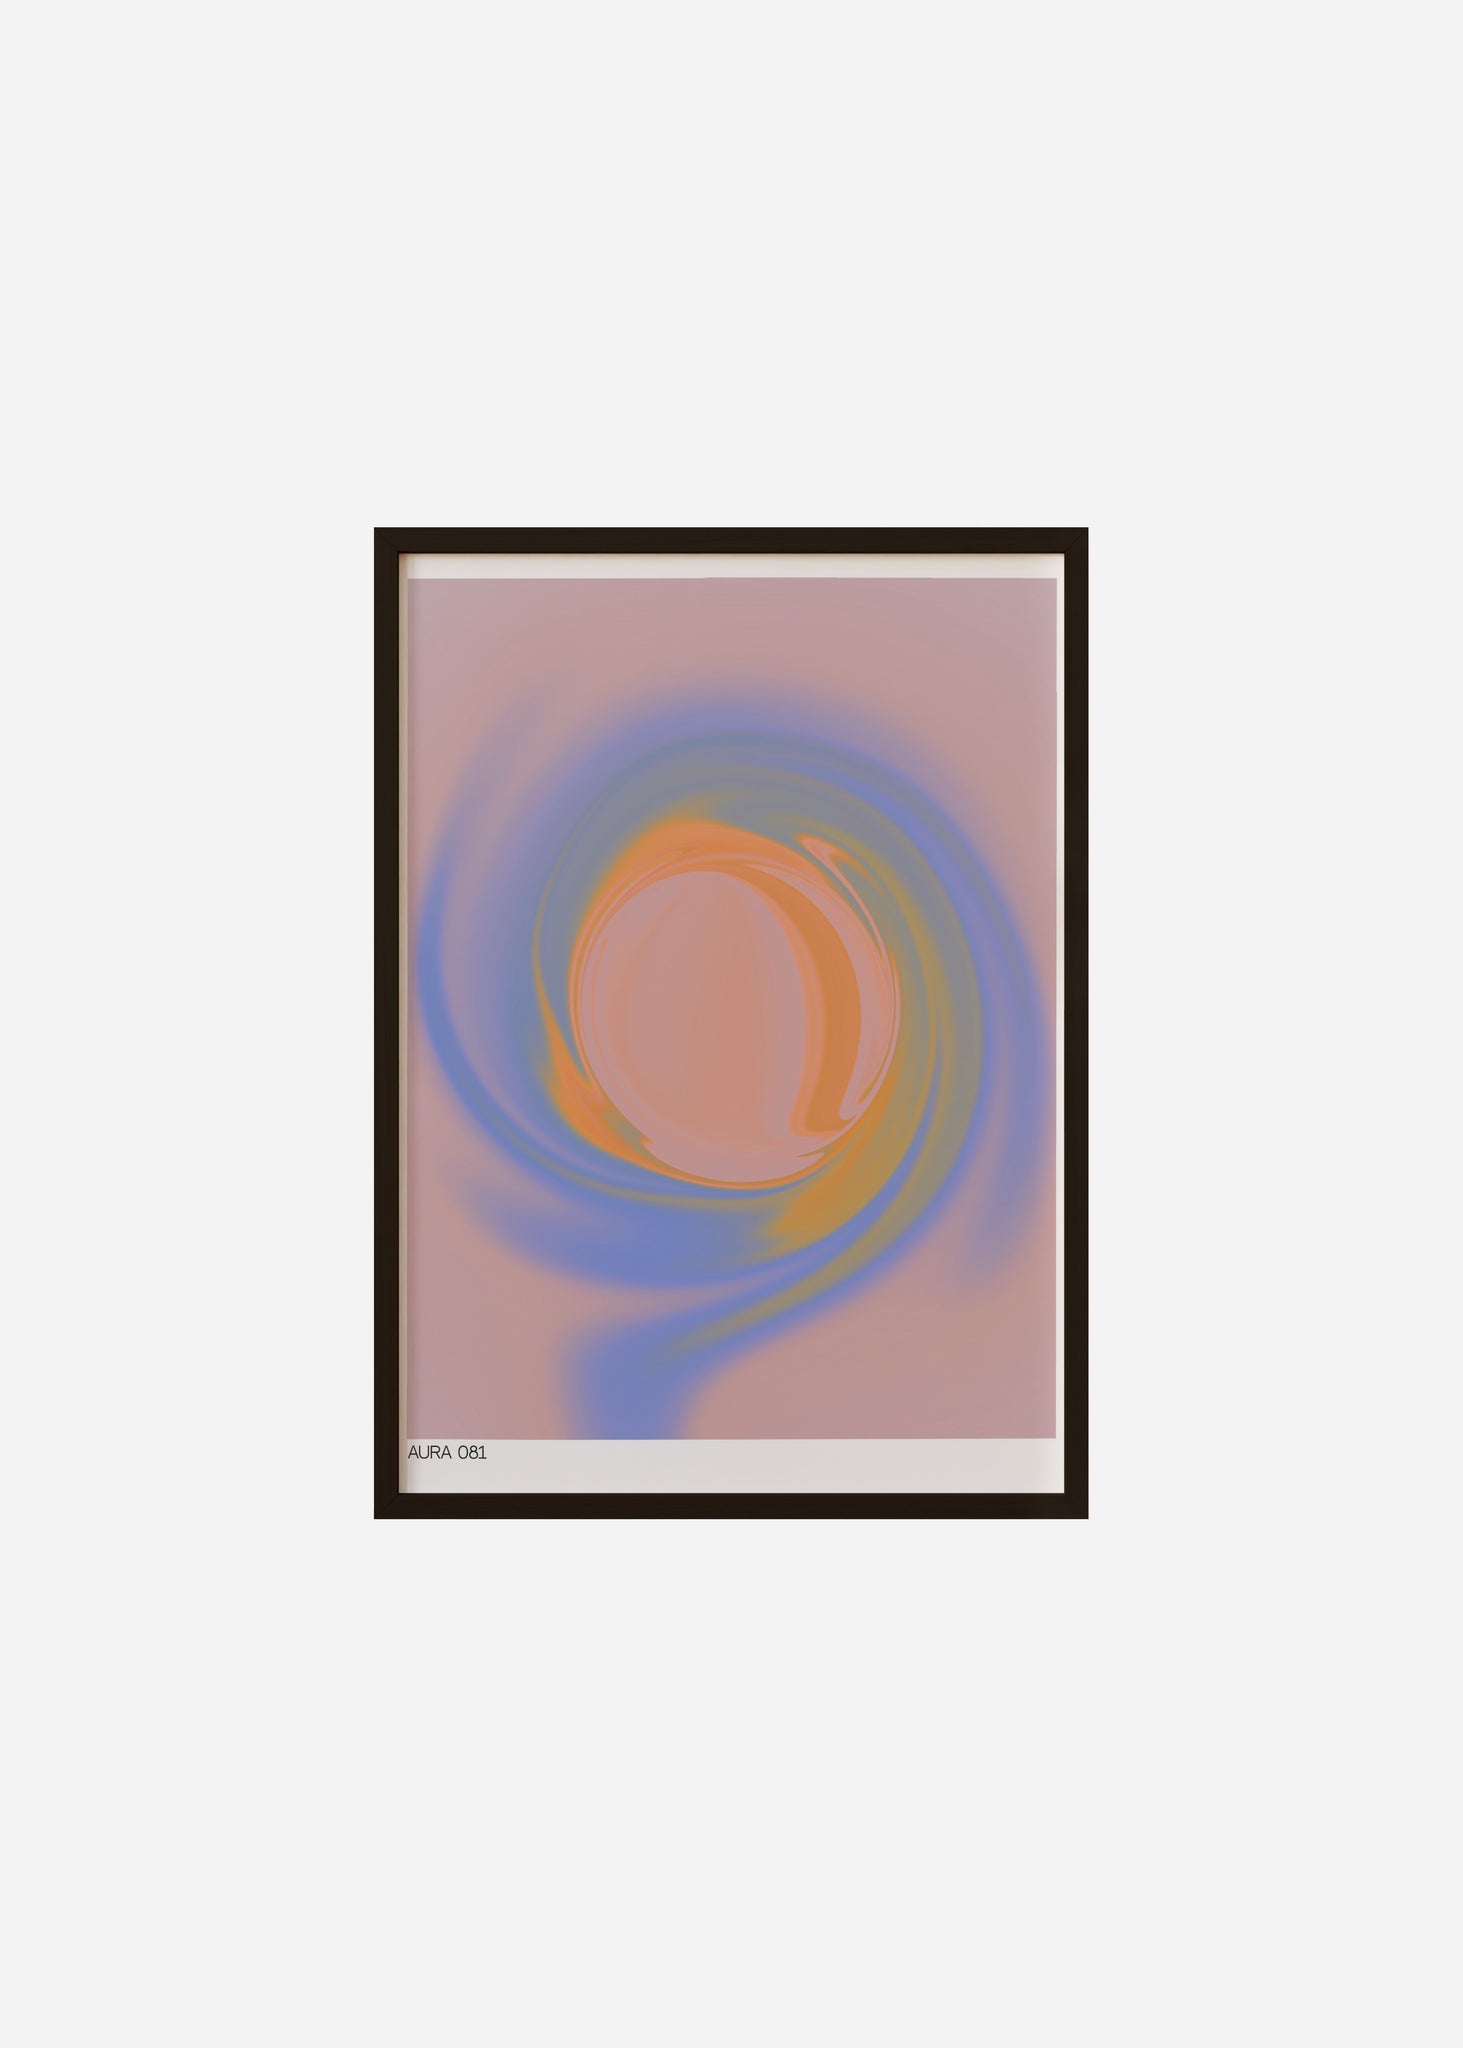 aura 081 Framed Print